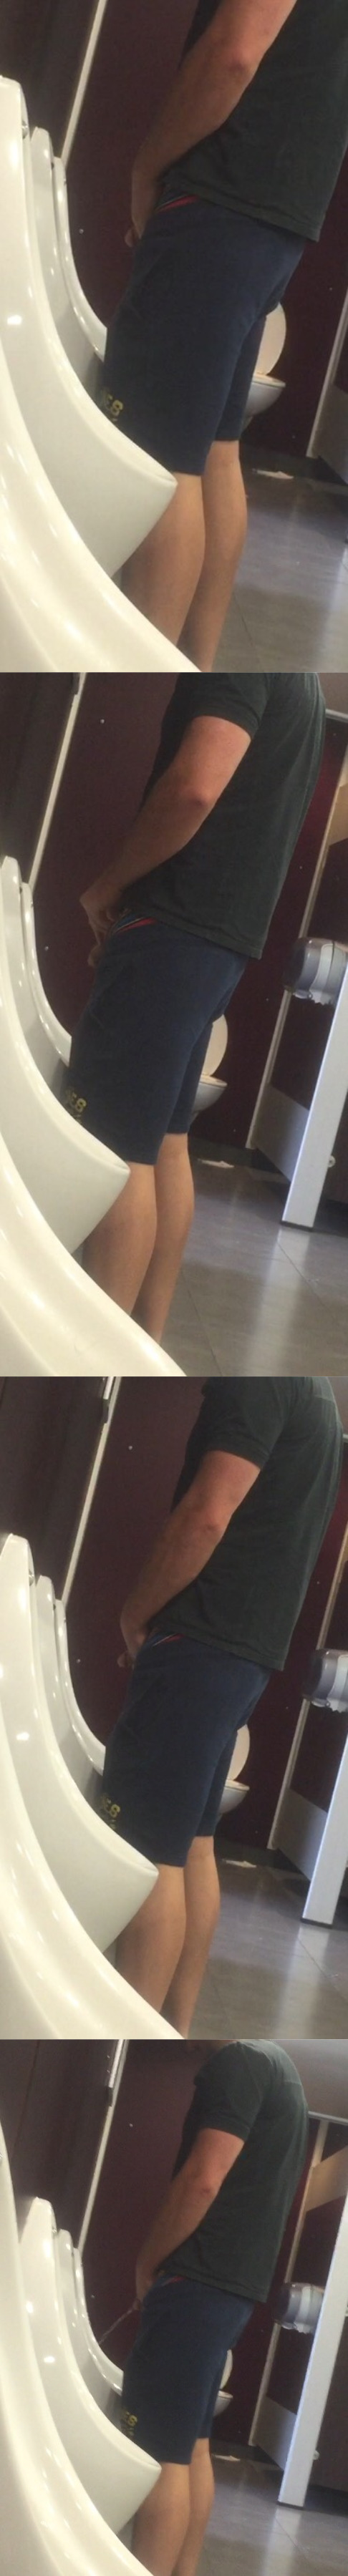 spycam guy peeing urinal public toilet